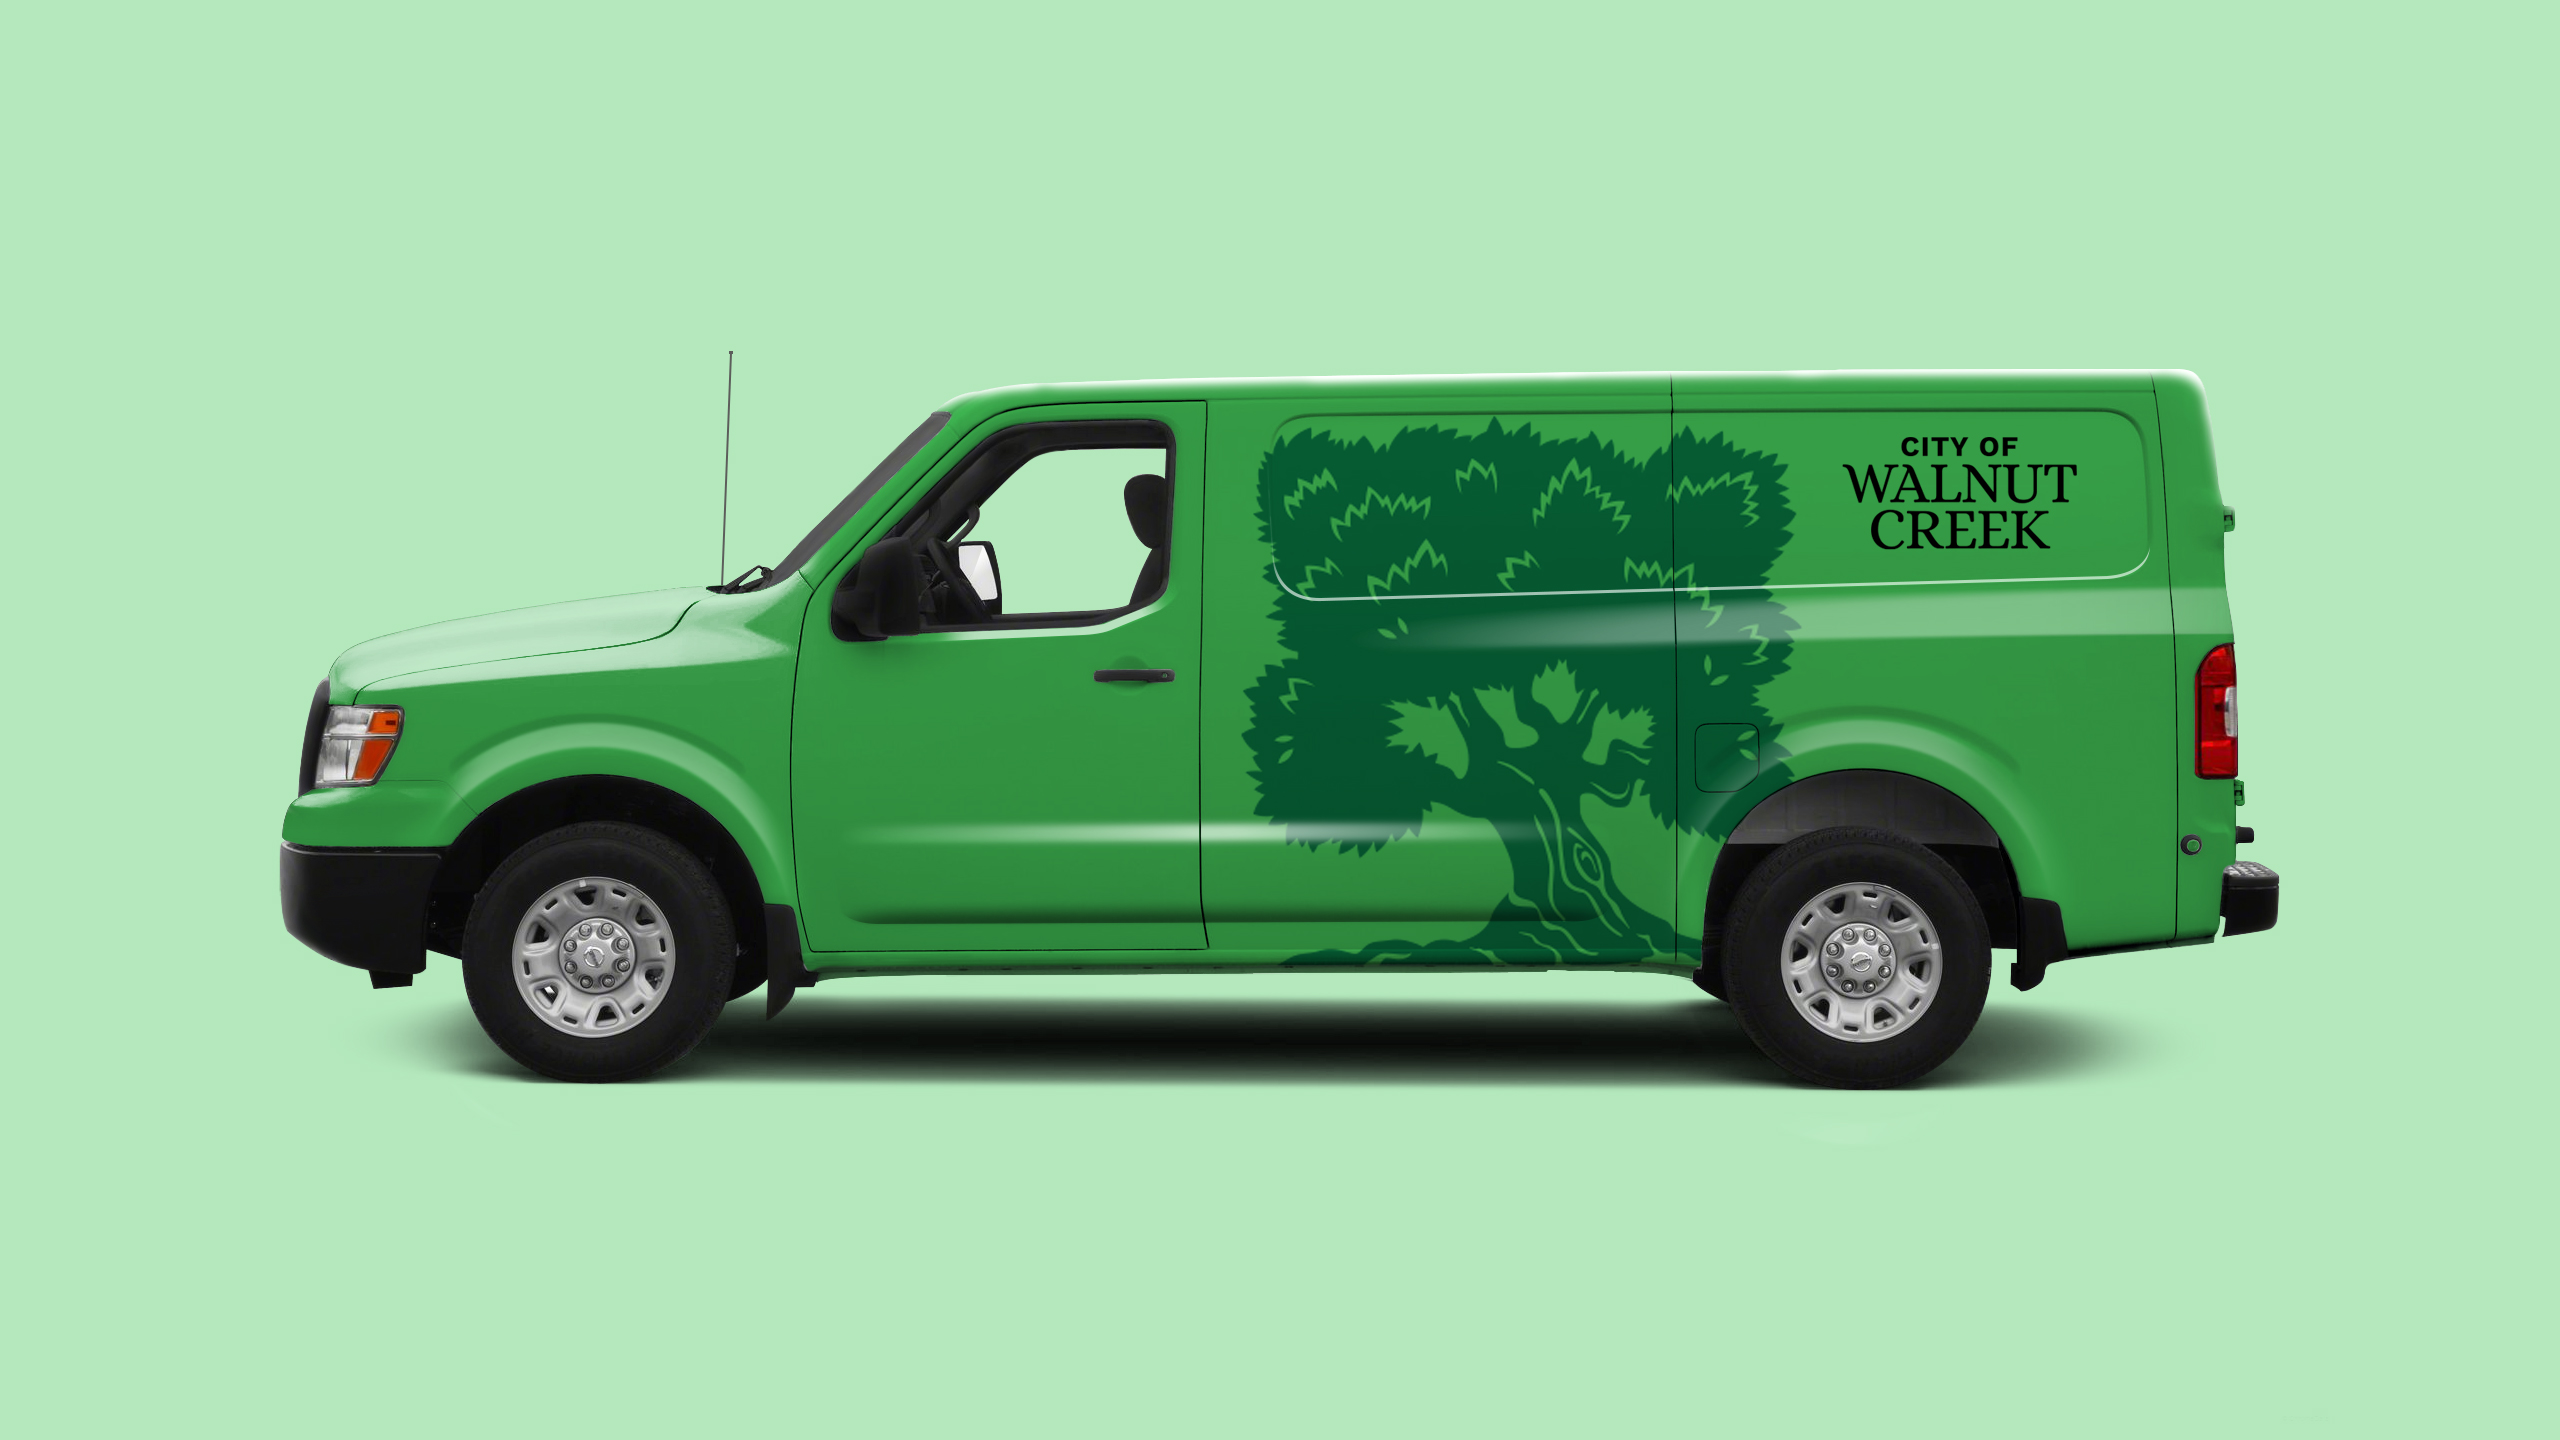 City of Walnut Creek Rebranded Van designed by Kilter